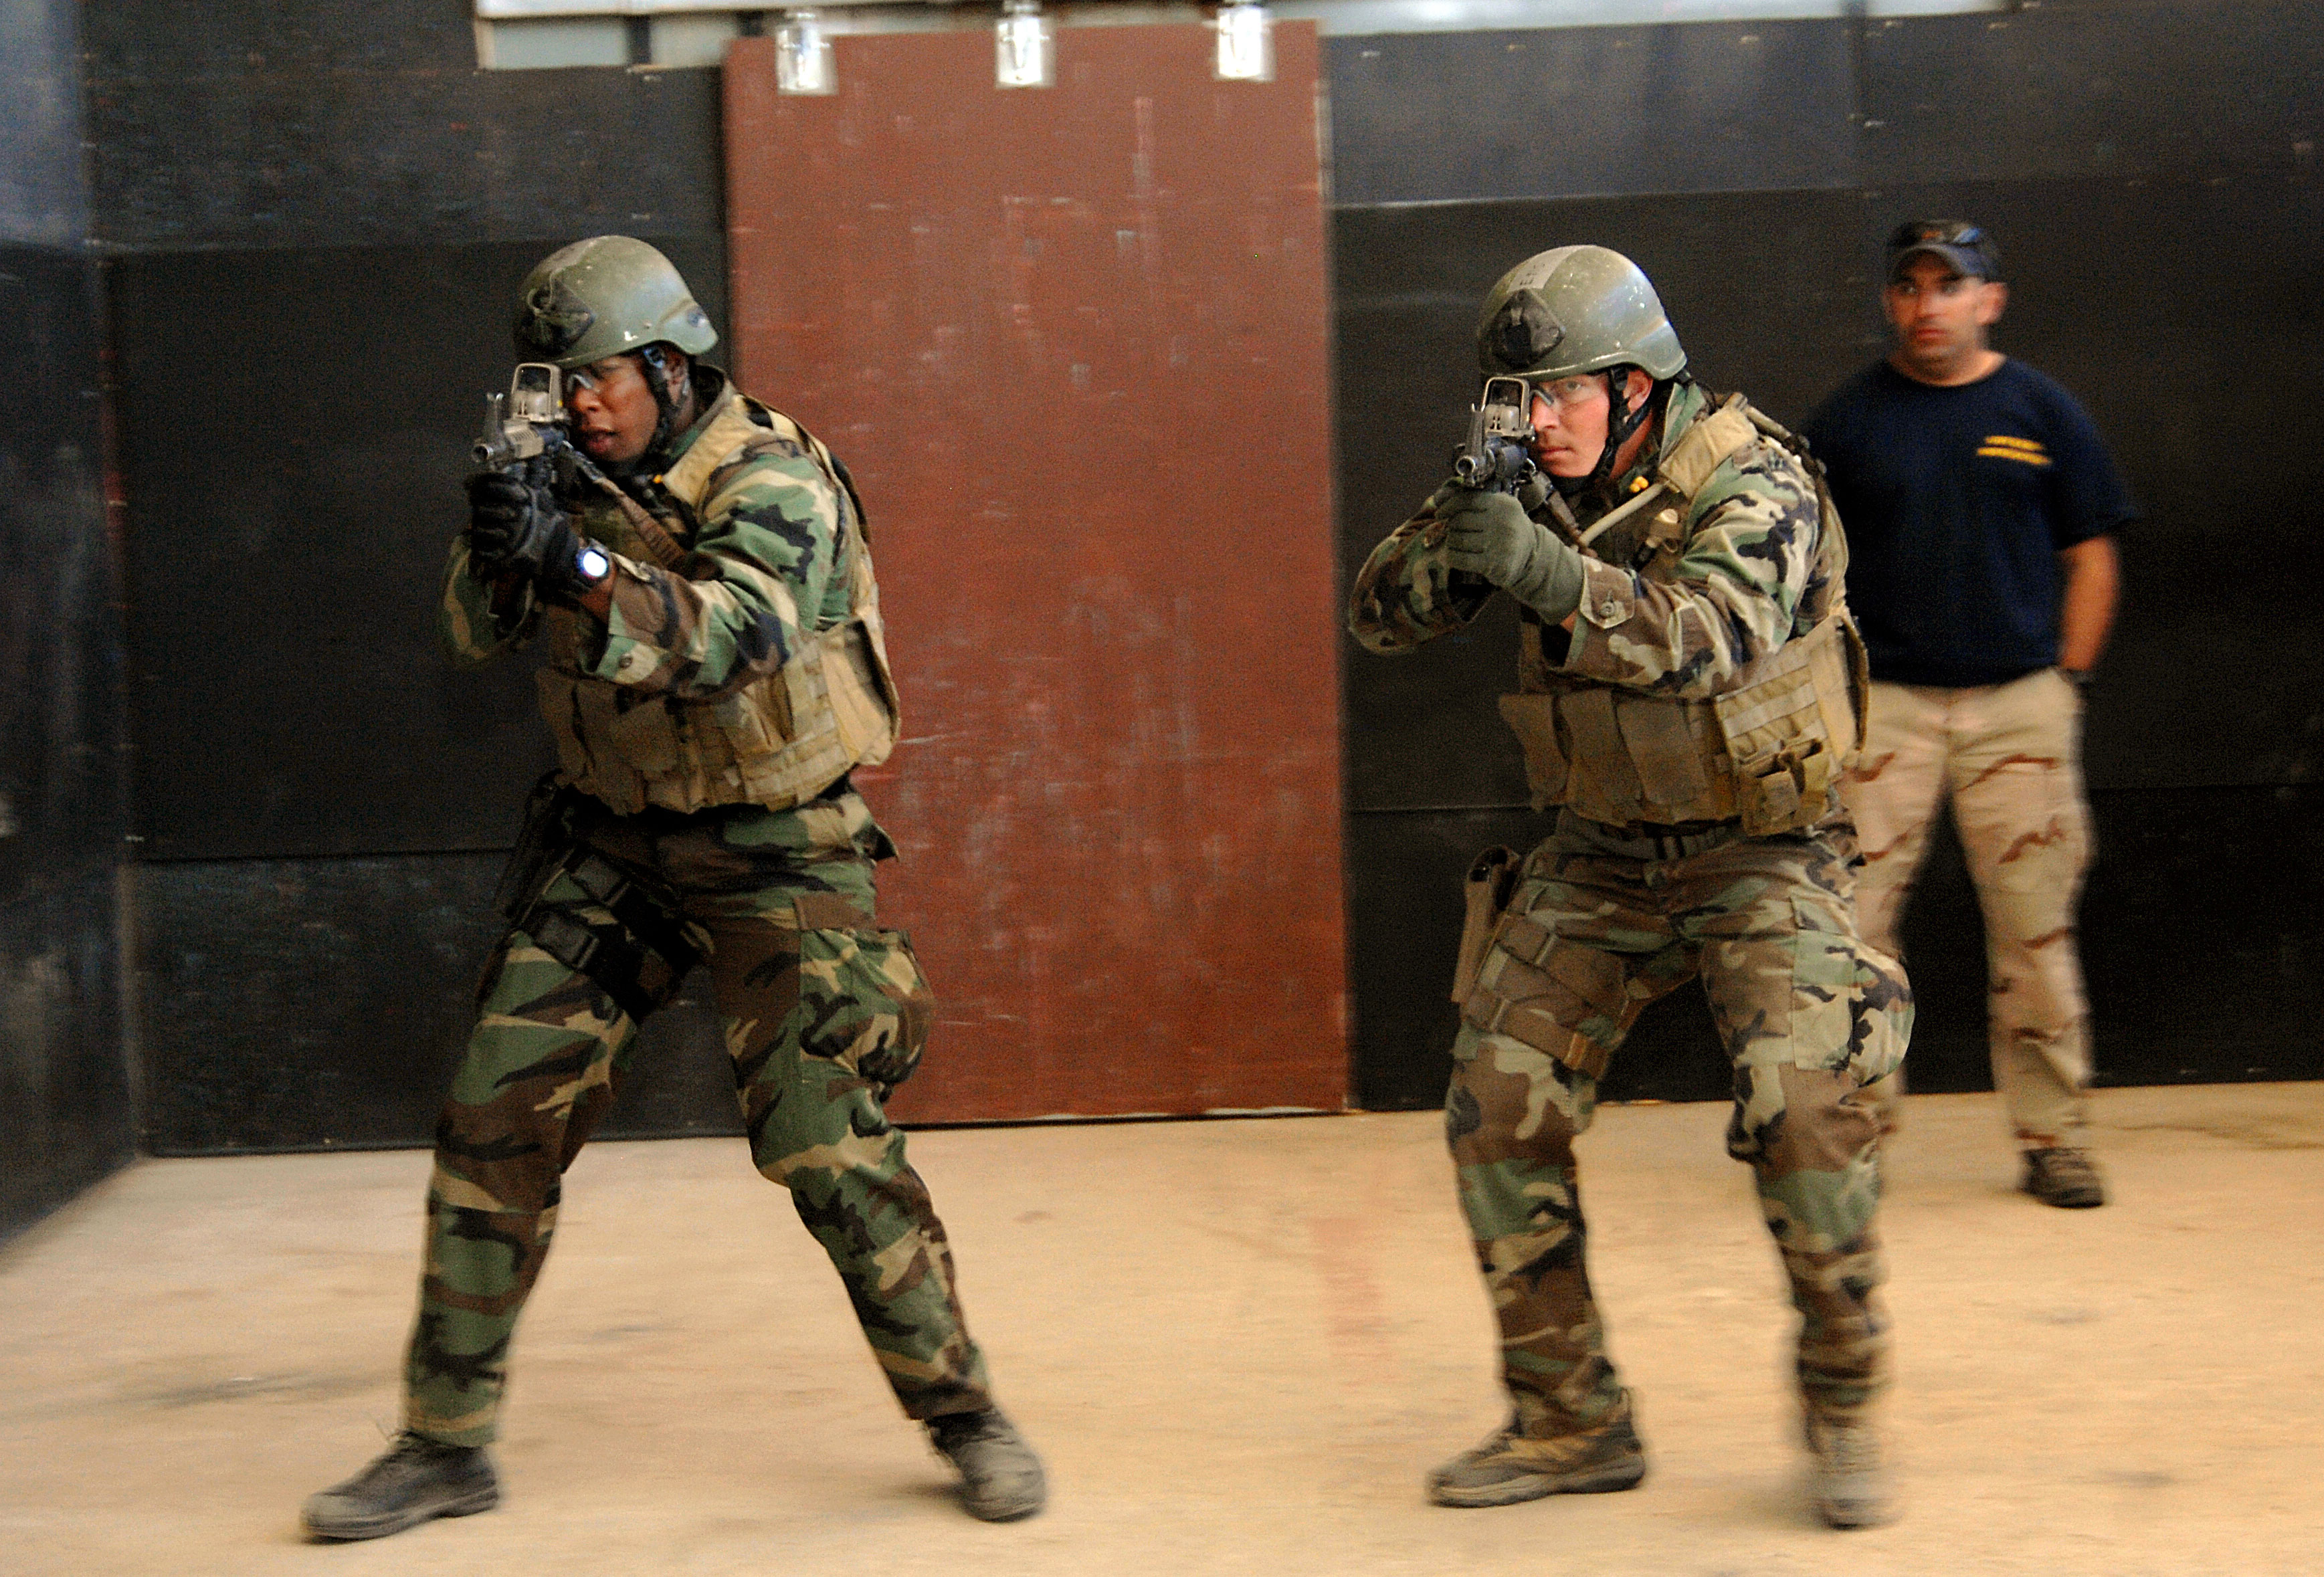 http://www.americanspecialops.com/images/photos/navy-seals/seals-cqb-training-hires.jpg